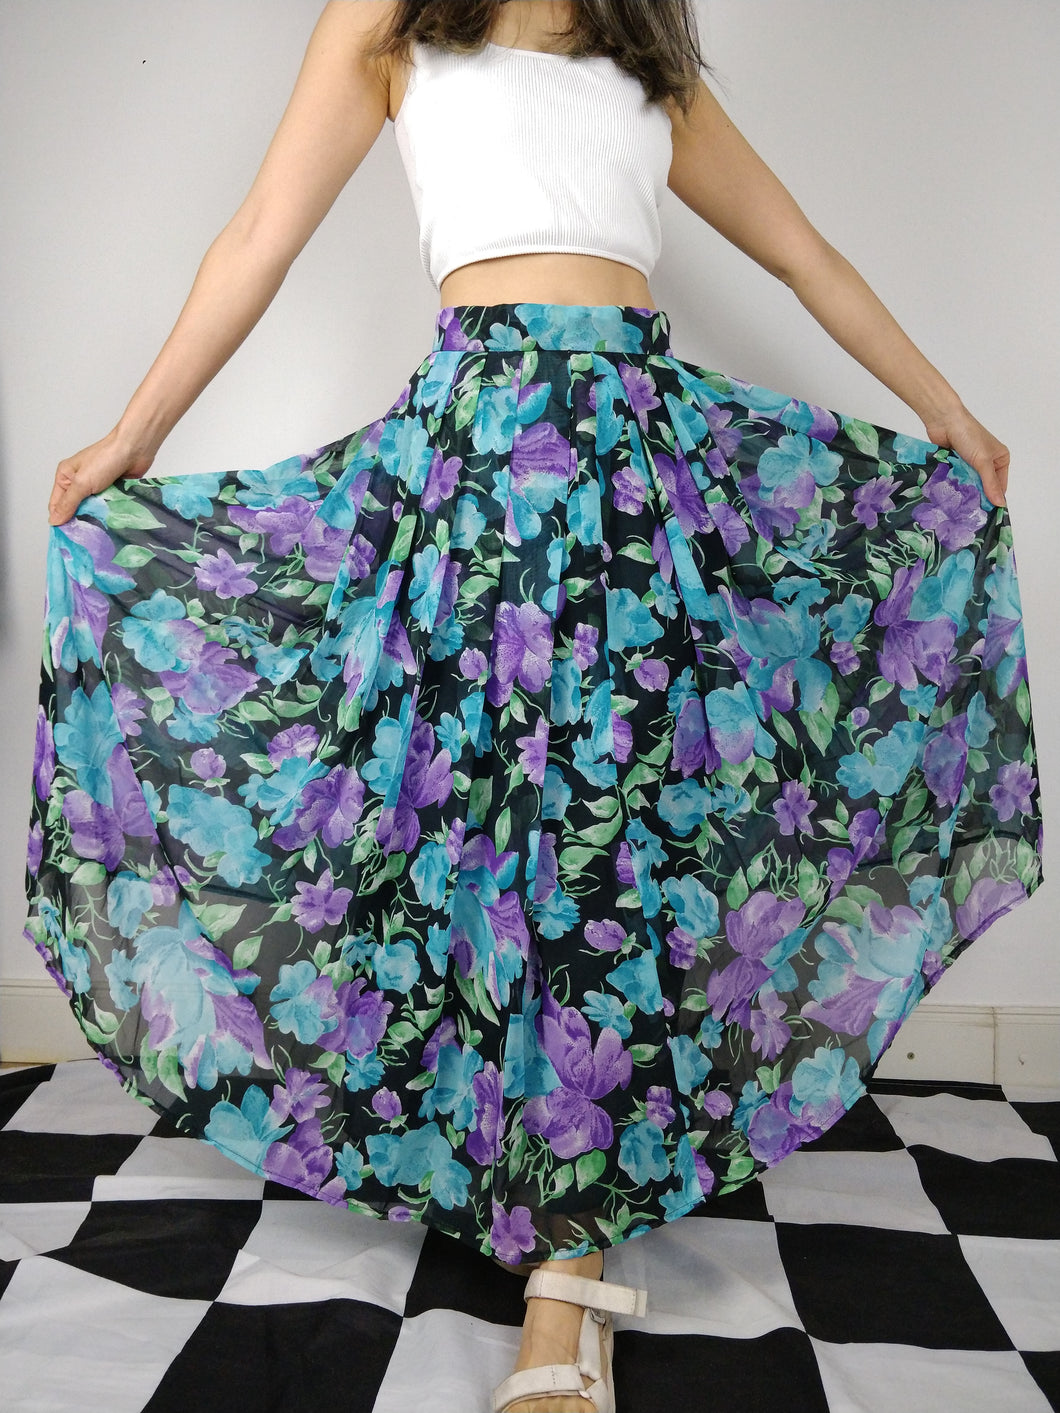 The Purple Skirt | Vintage flower floral pink pattern print long maxi flared skirt purple black blue green XS